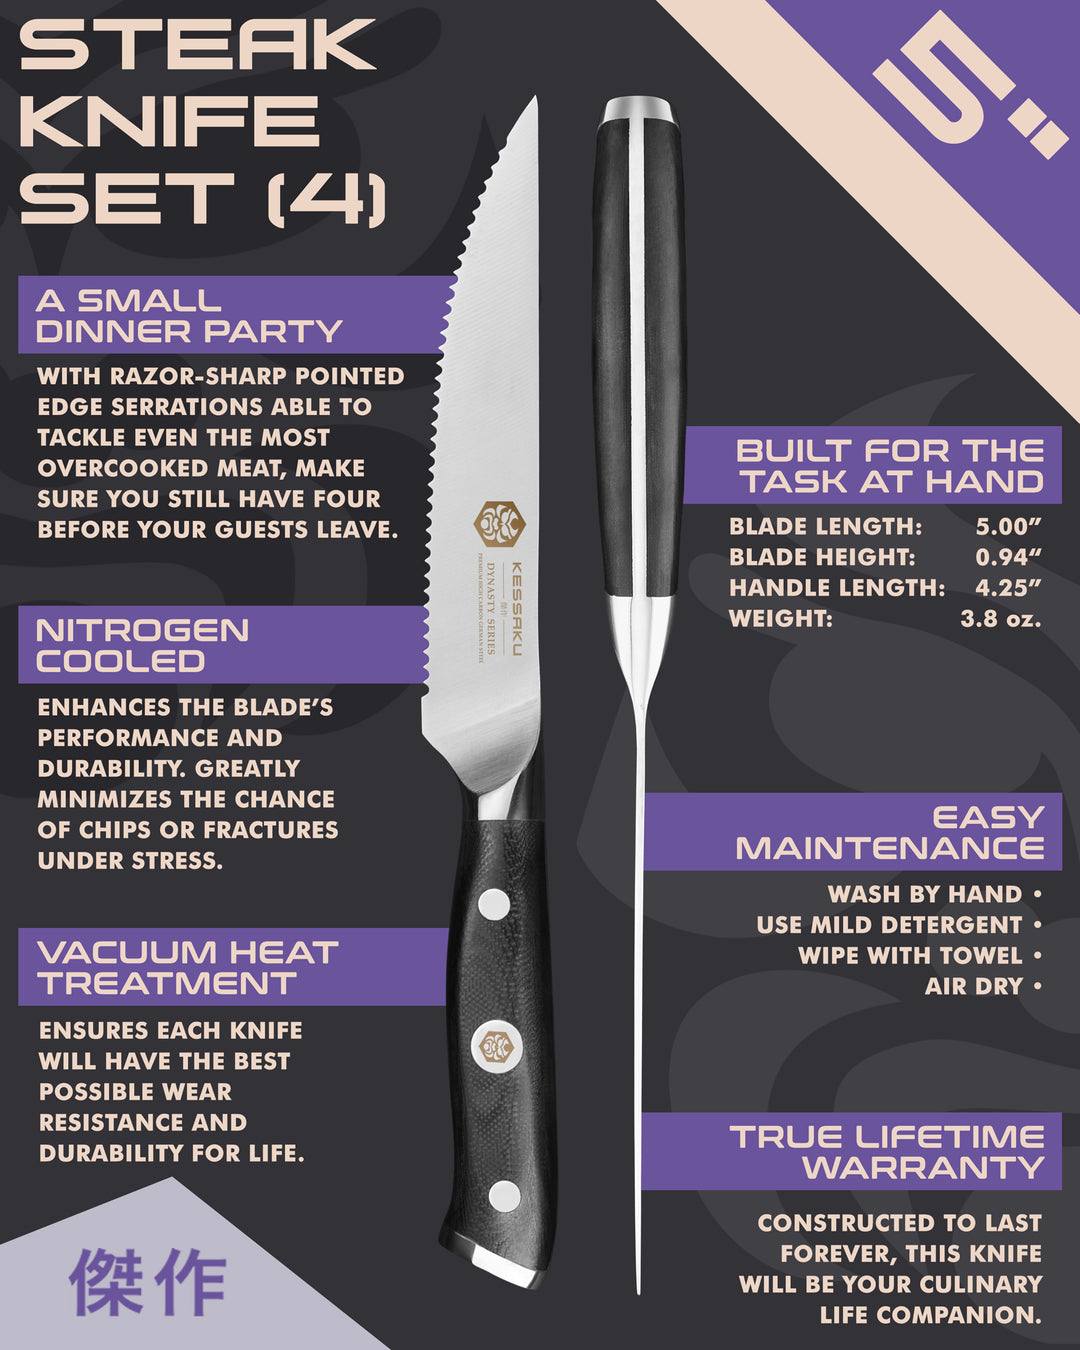 Kessaku Dynasty Series Steak Knife uses, dimensions, maintenance, warranty info, and additional blade treatments